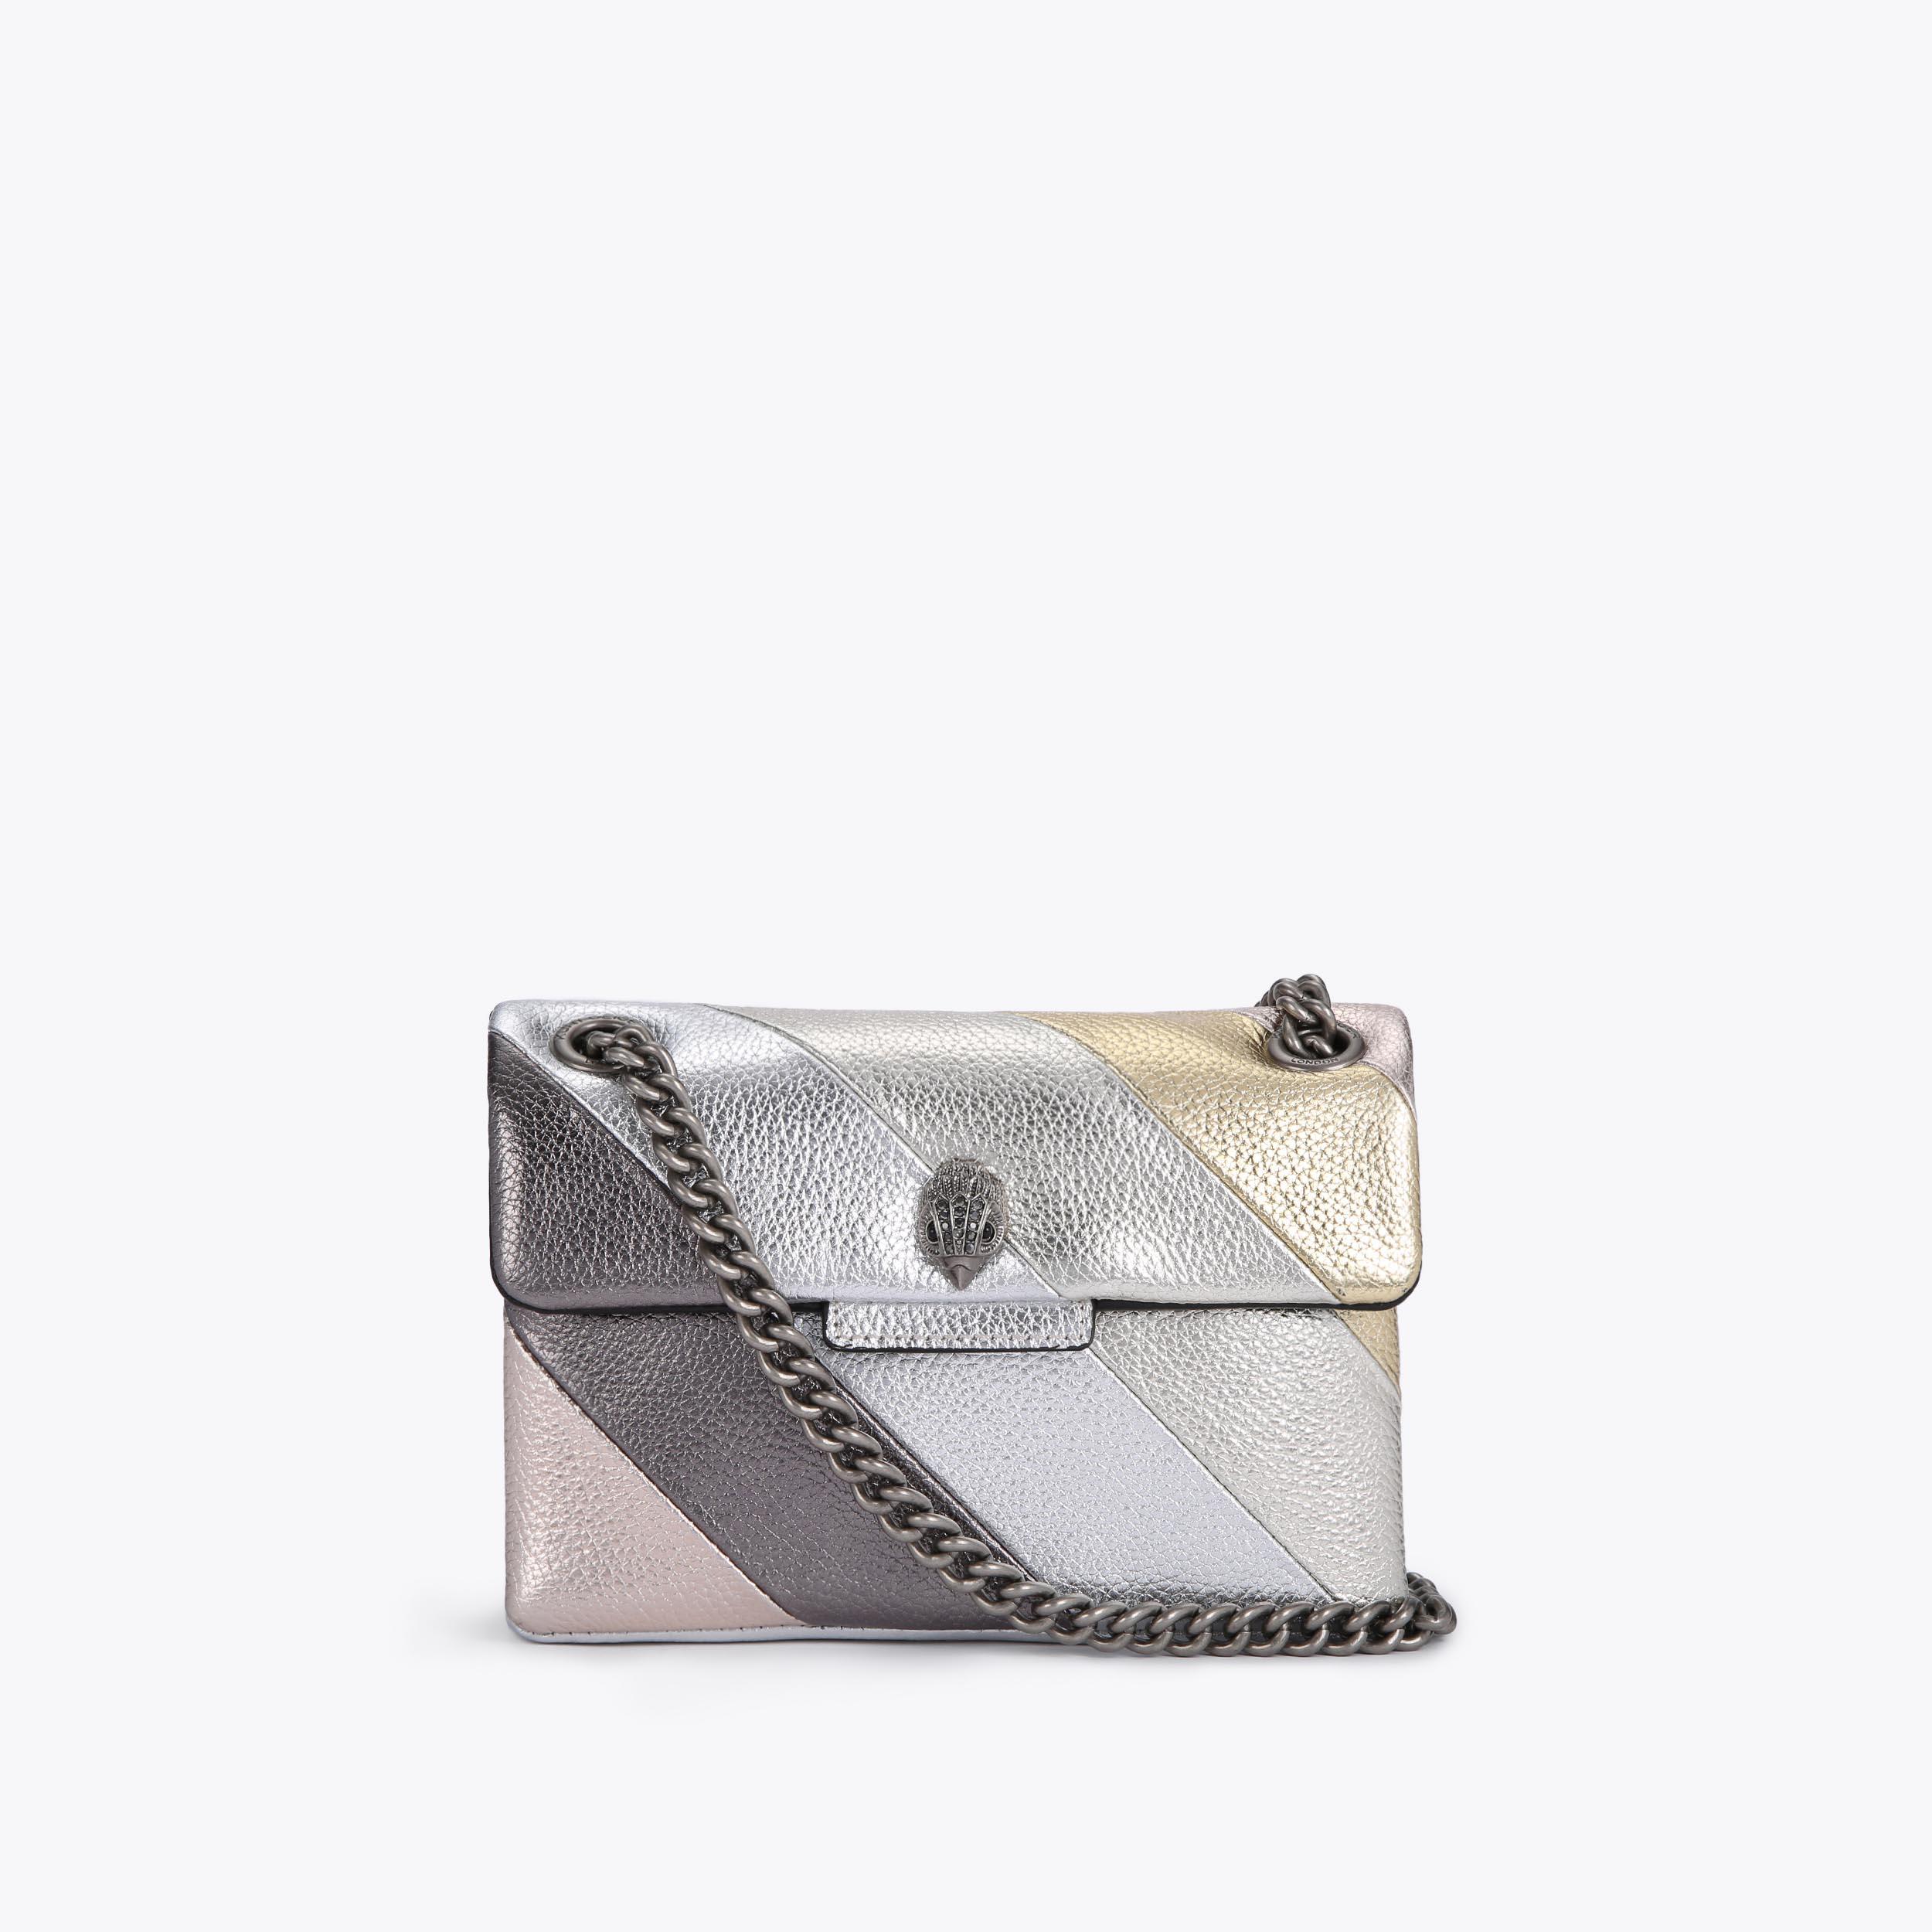 LEATHER MINI KENSINGTON Metallic Shoulder Bag by KURT GEIGER LONDON